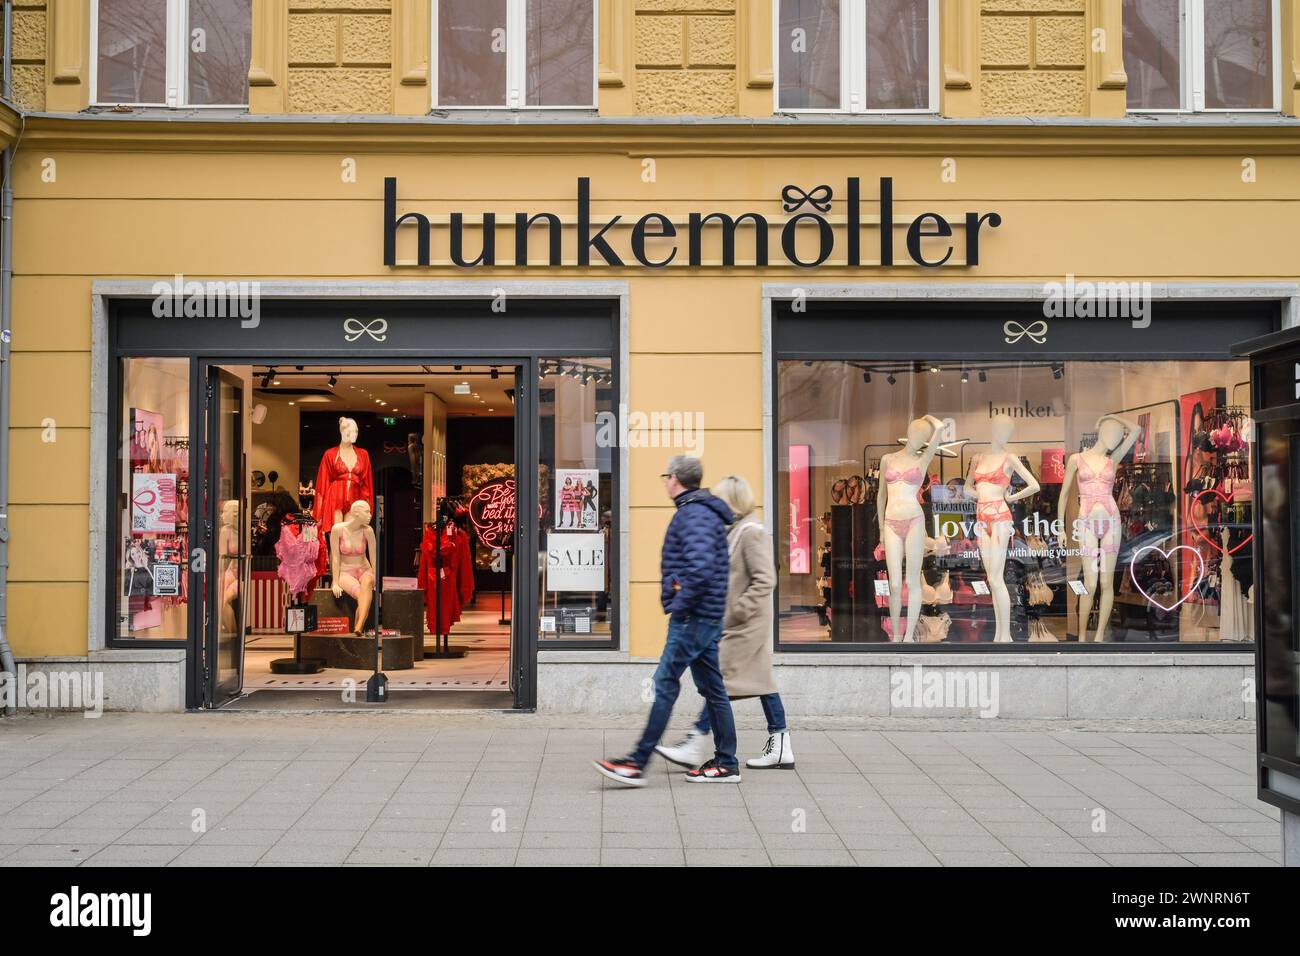 Hunkemöller hi-res stock photography and images - Alamy